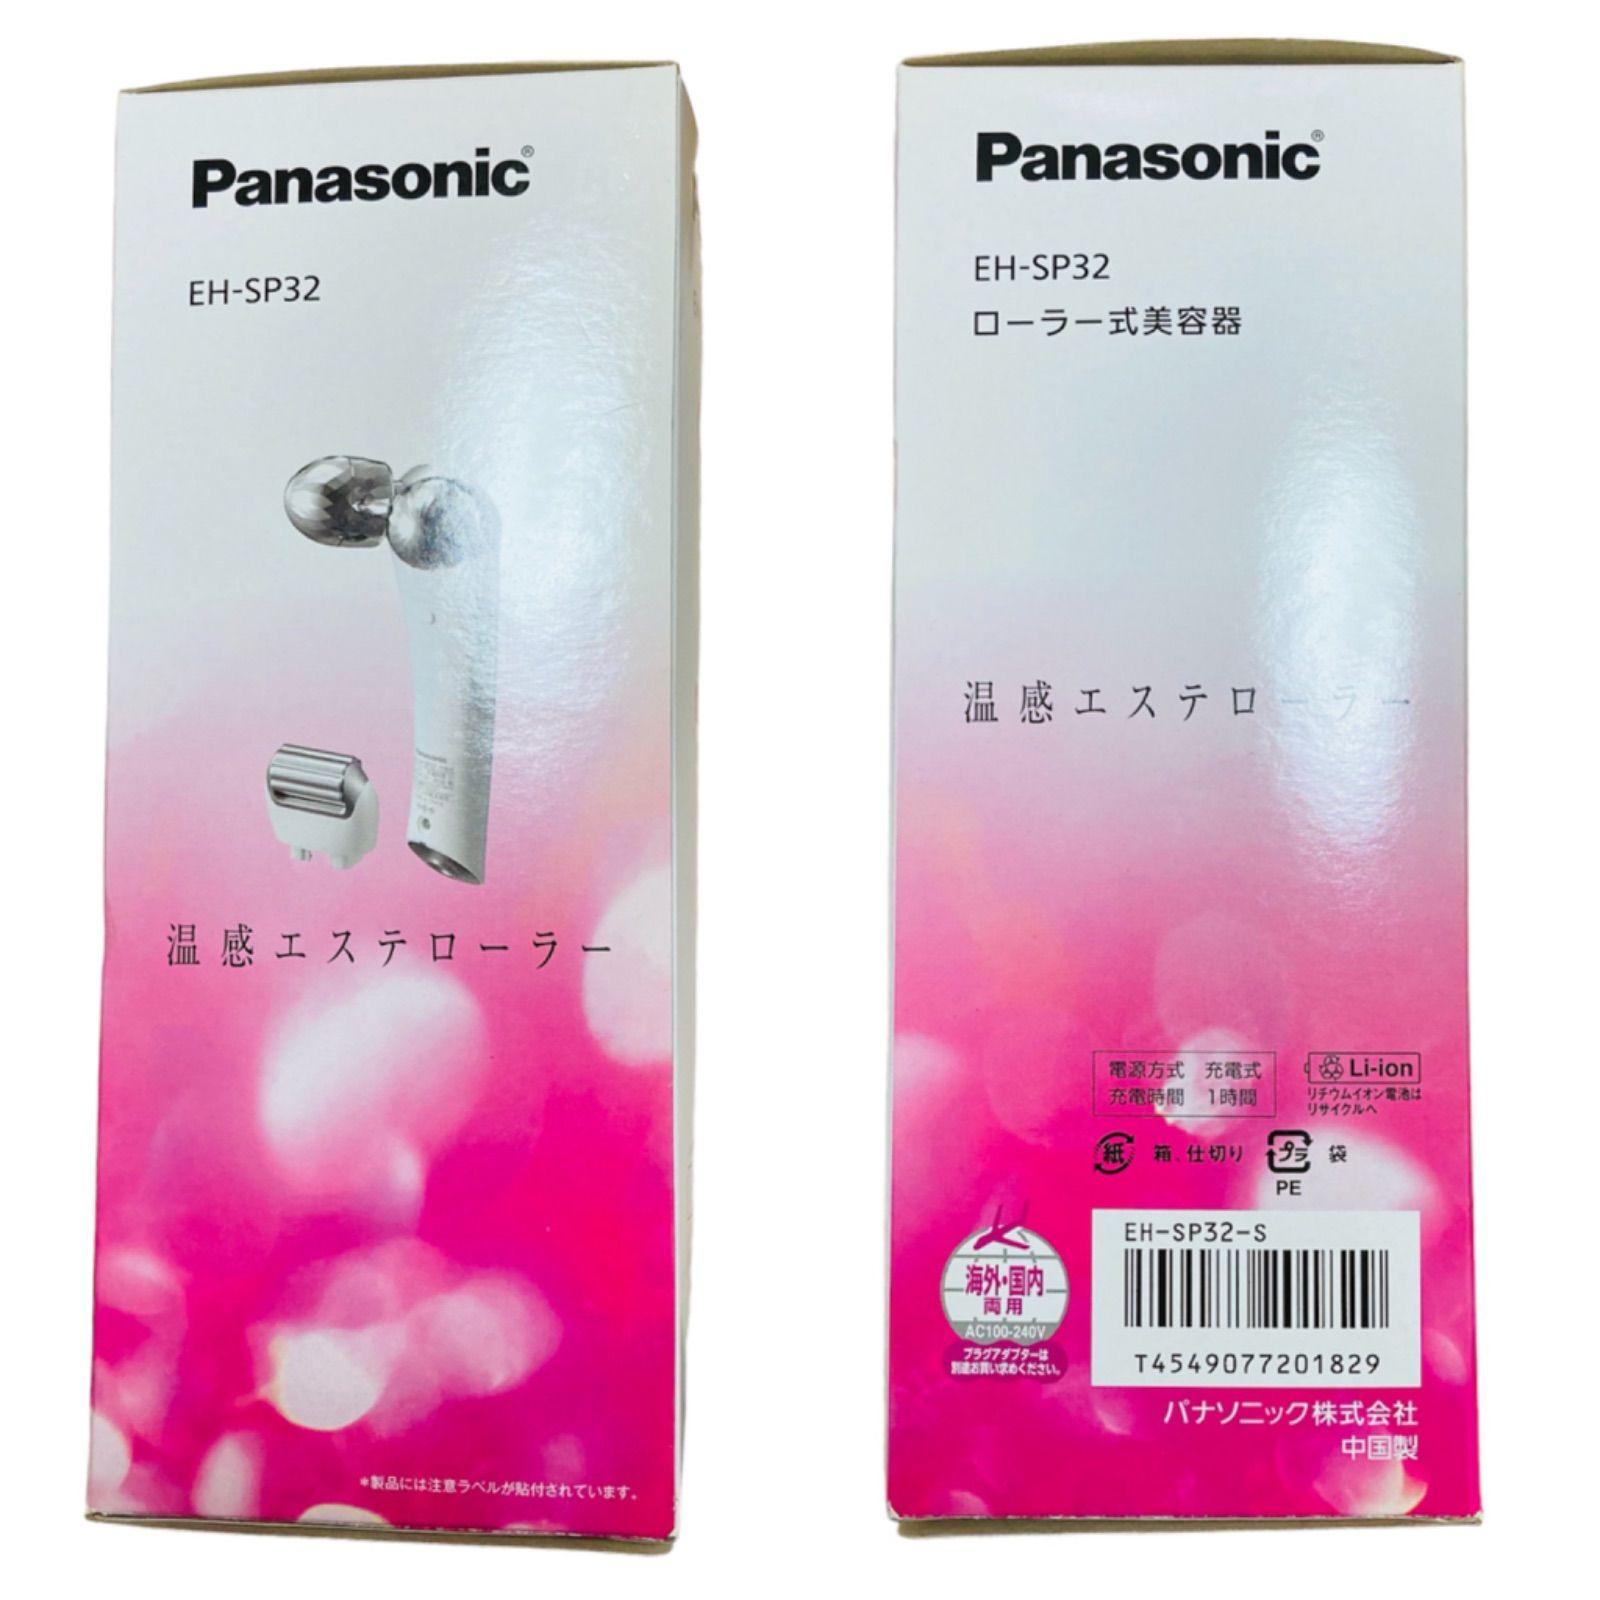 Panasonic ローラー式美容器 温感エステローラー EH-SP32-S - コスメ ...